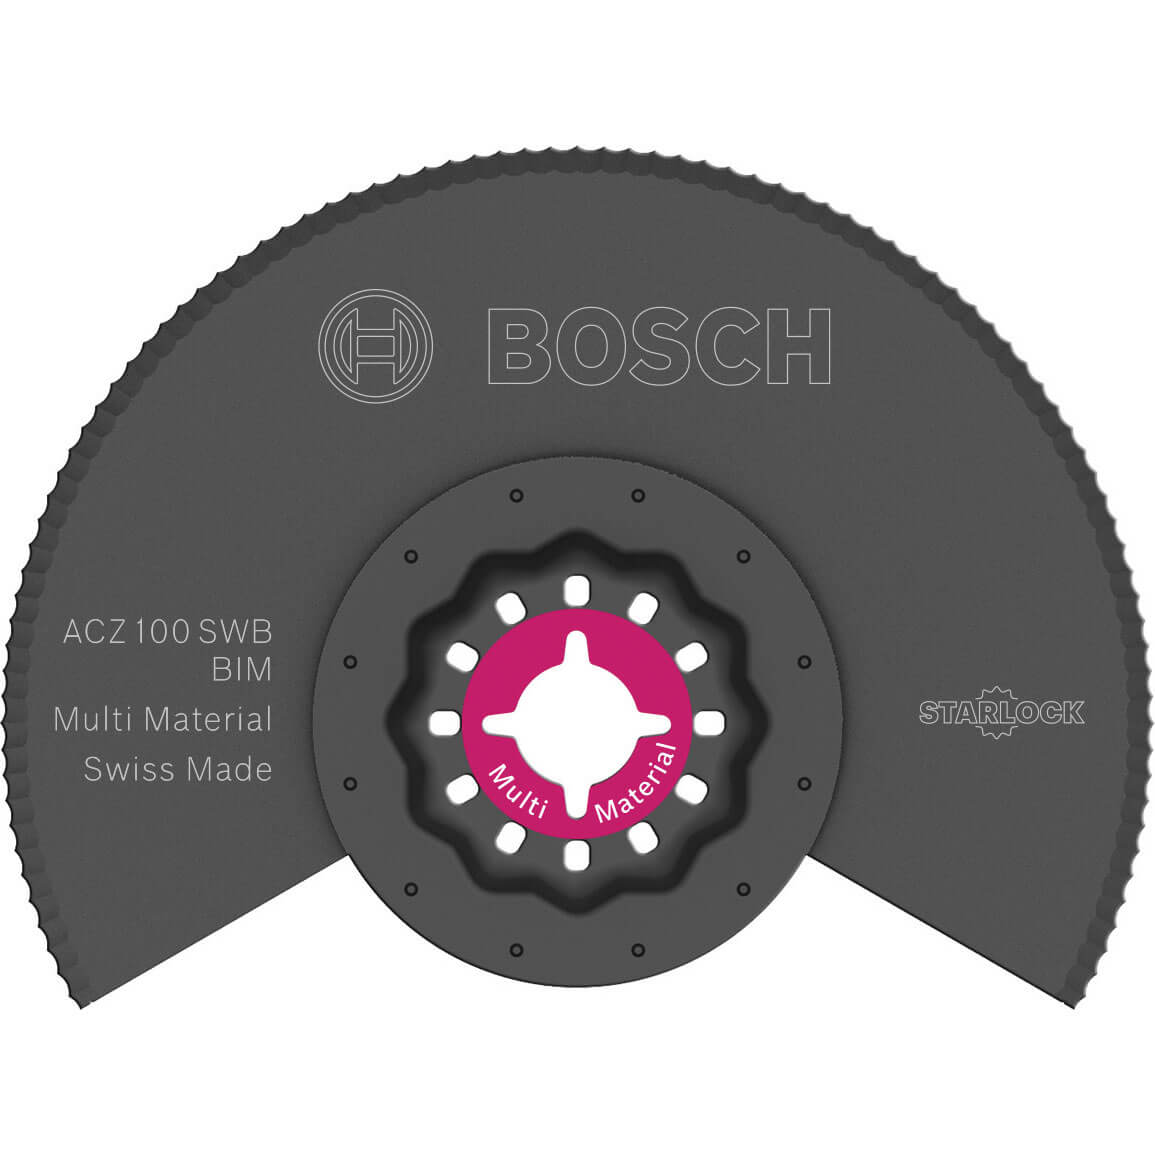 Photo of Bosch Acz 100 Swb Multi Material Oscillating Multi Tool Segment Saw Blade 100mm Pack Of 1